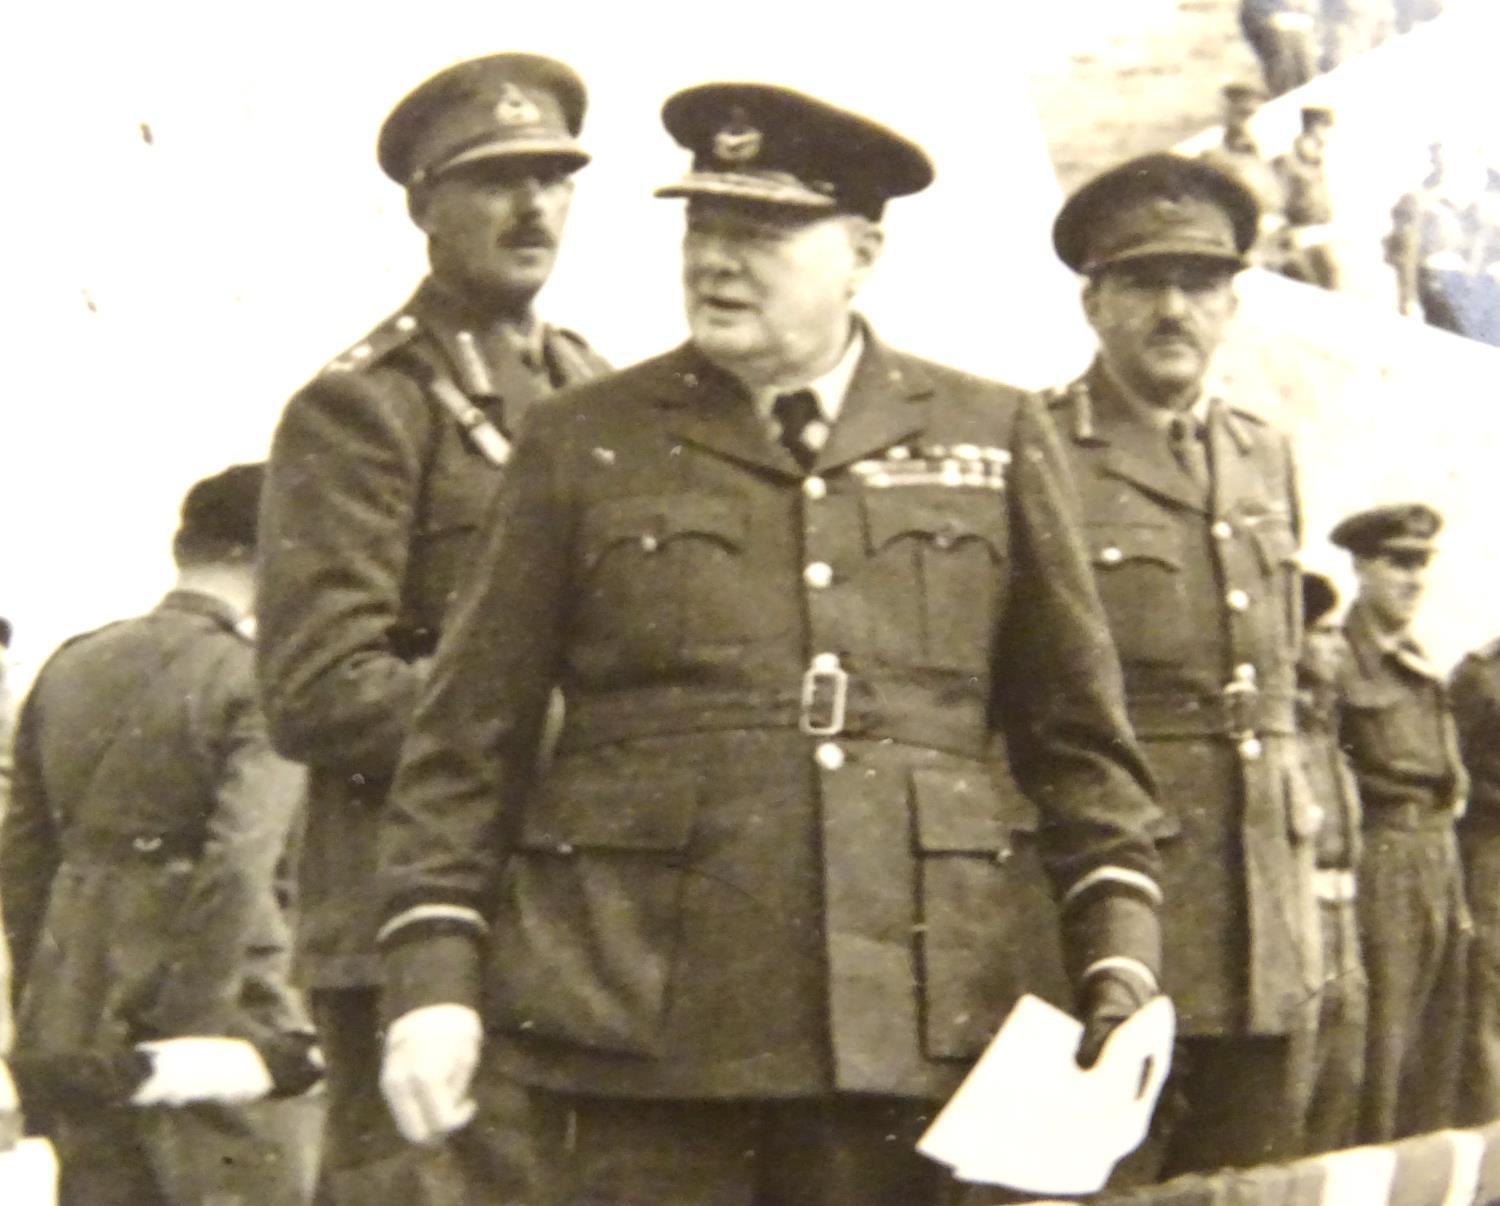 Militaria: two WW2 / WW2 / Second World War monochrome photographs, depicting Sir Winston - Image 7 of 16